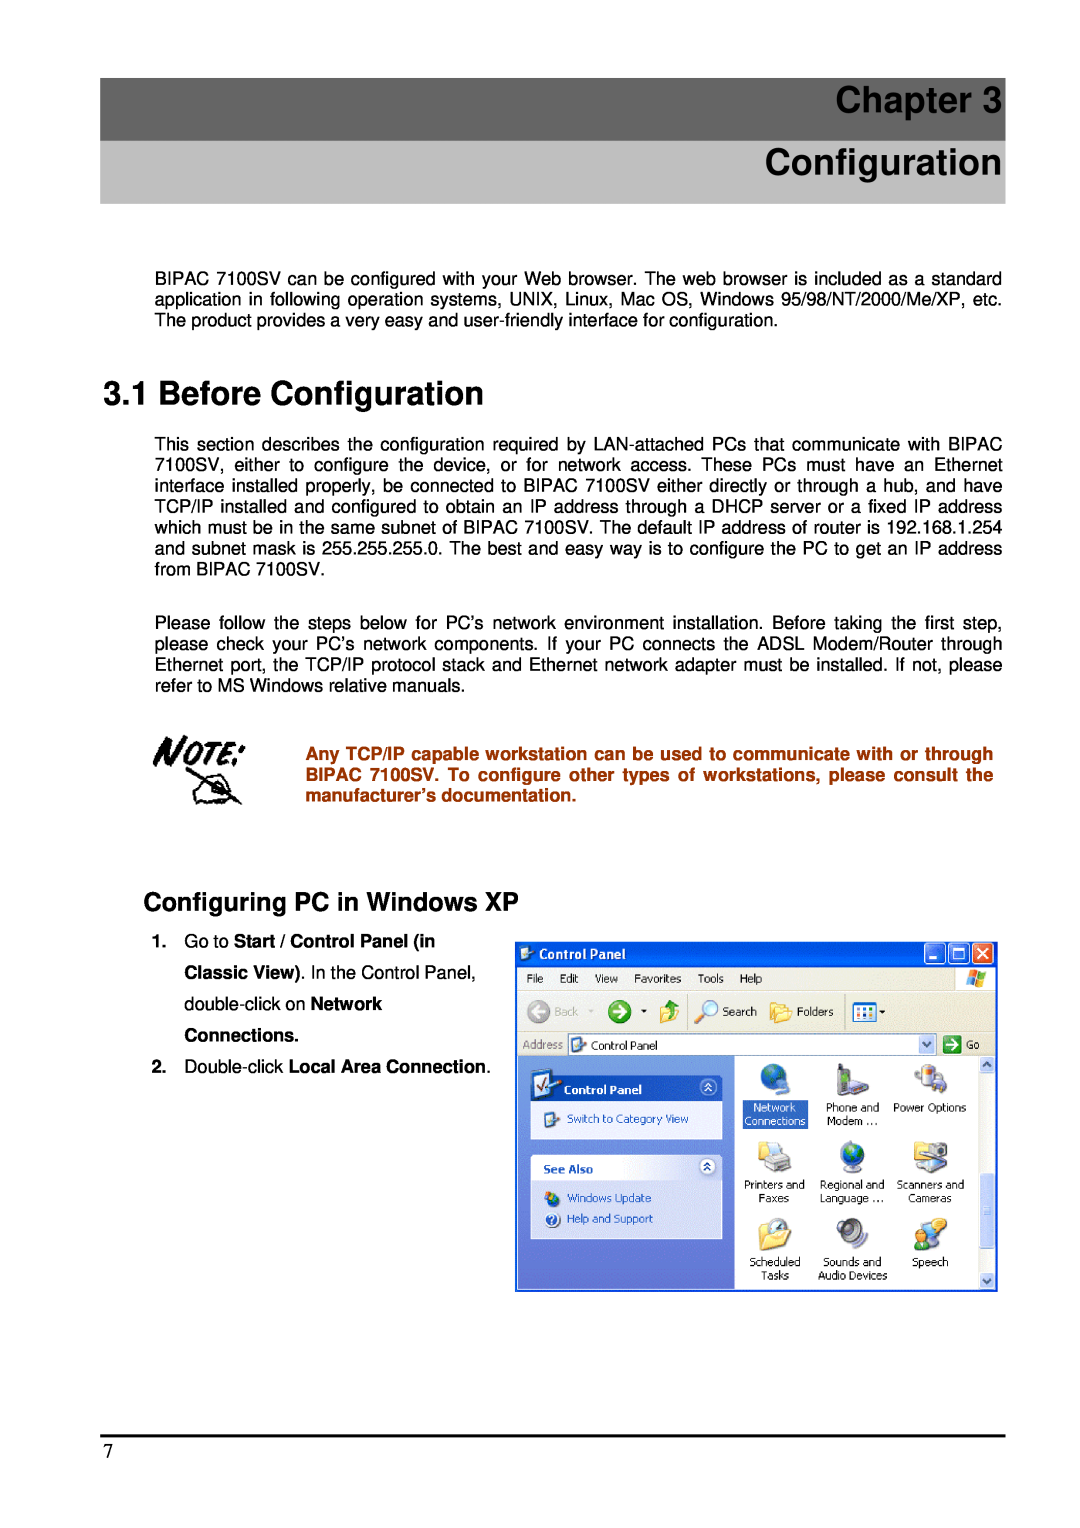 Billion Electric Company 7100SV manual Chapter Configuration, Before Configuration, Configuring PC in Windows XP 